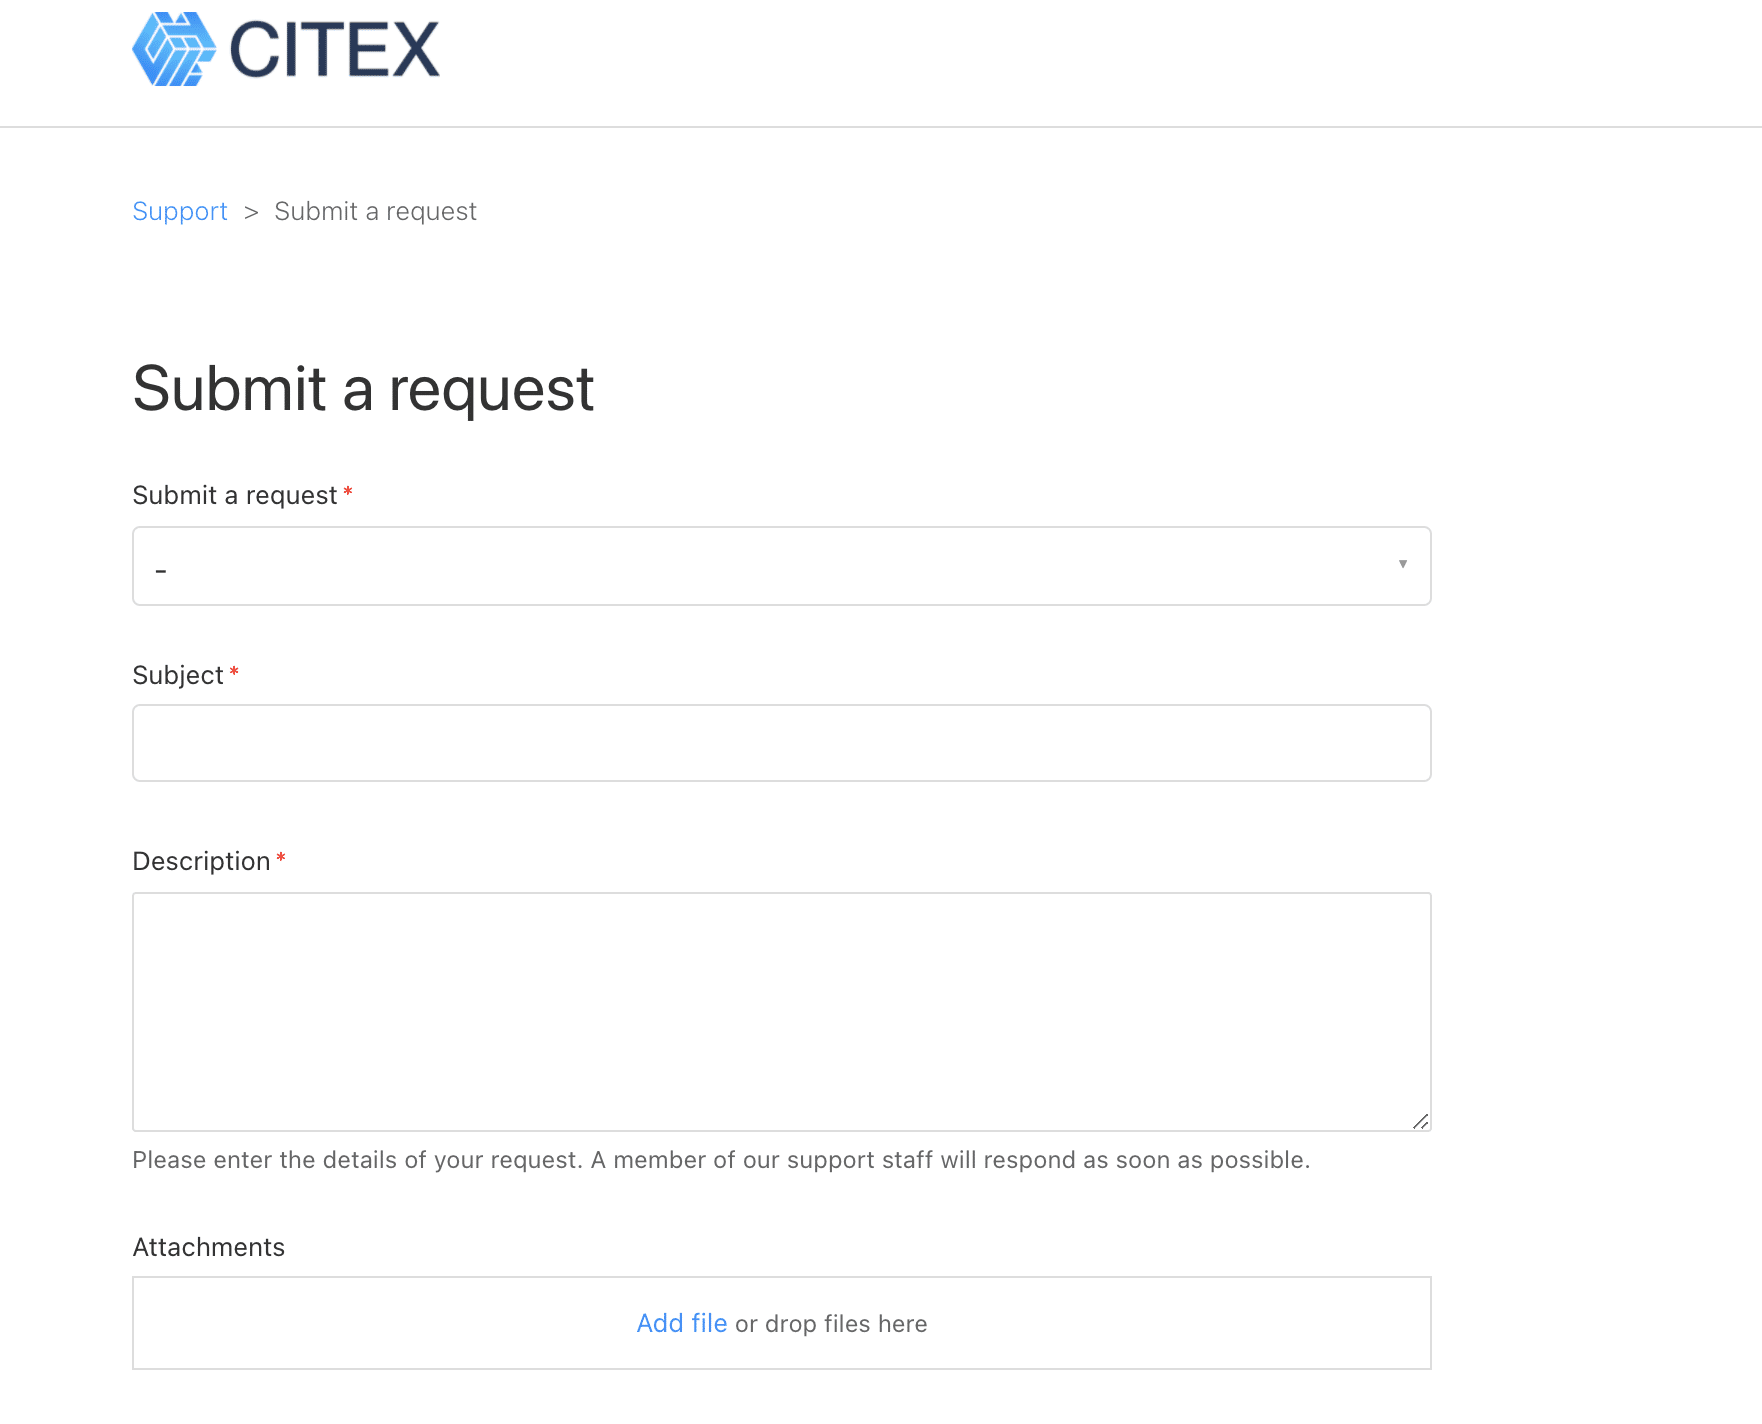 CITEX customer support